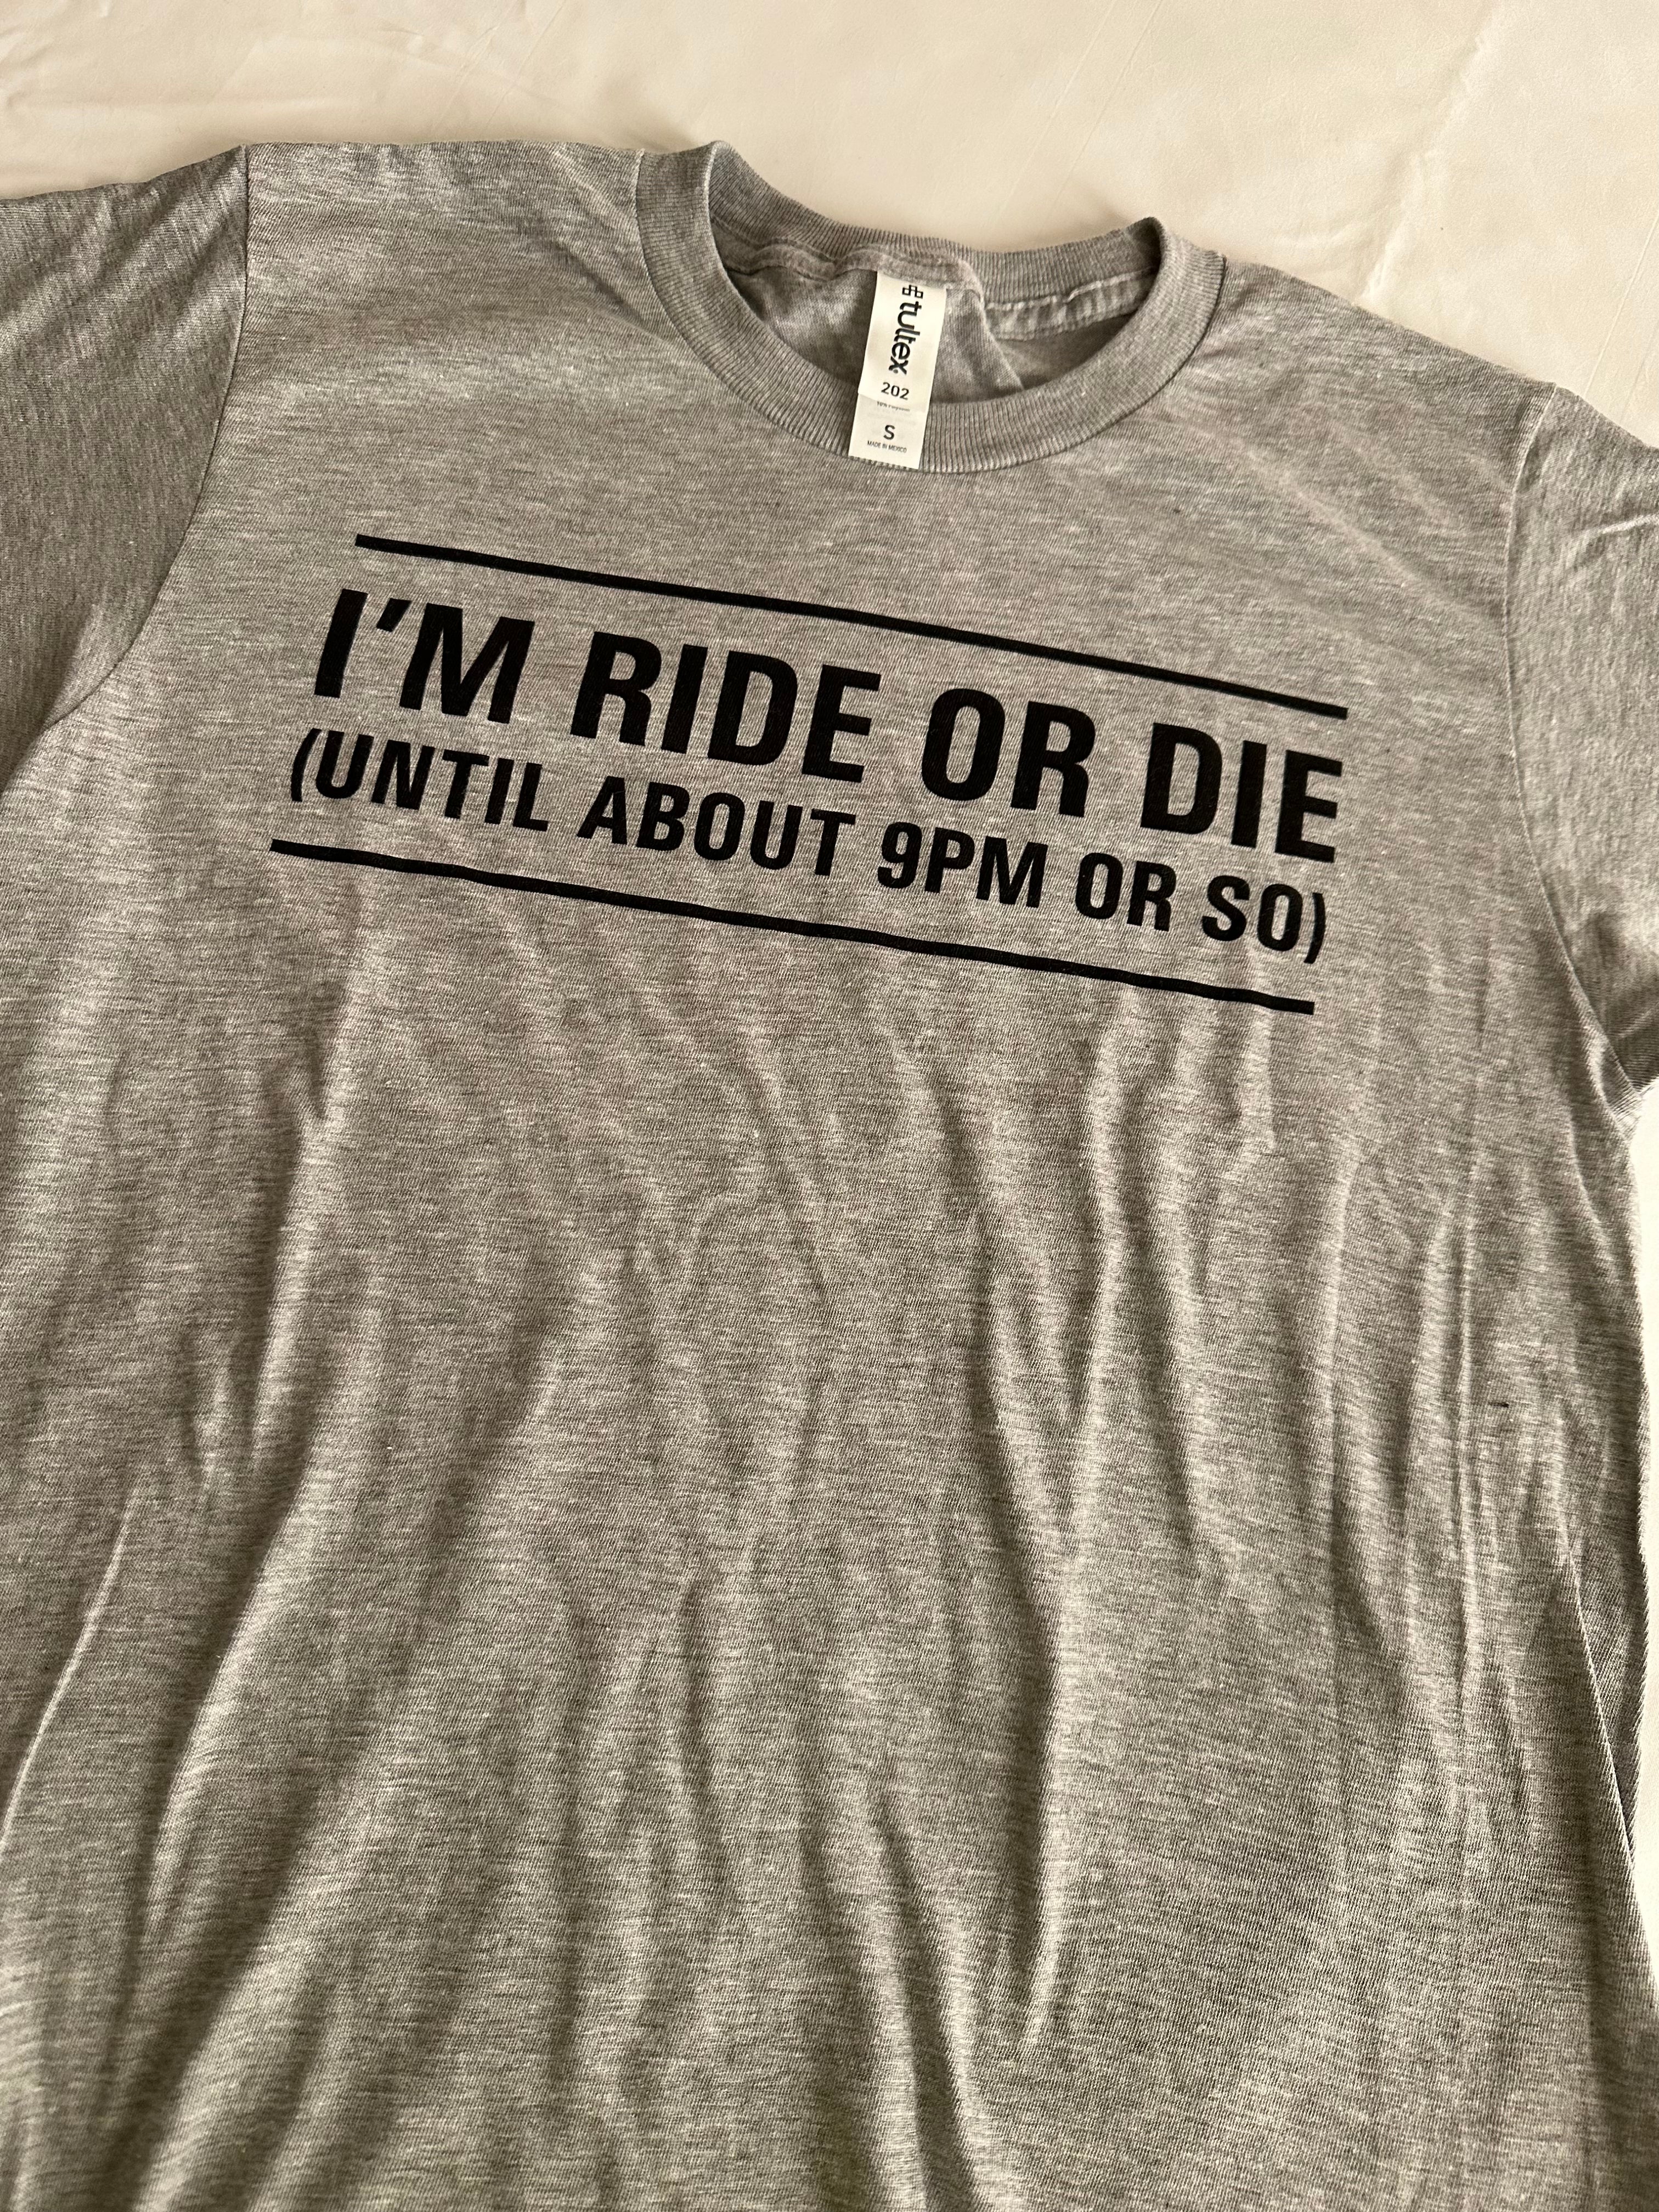 Market Special- I’m Ride or Die